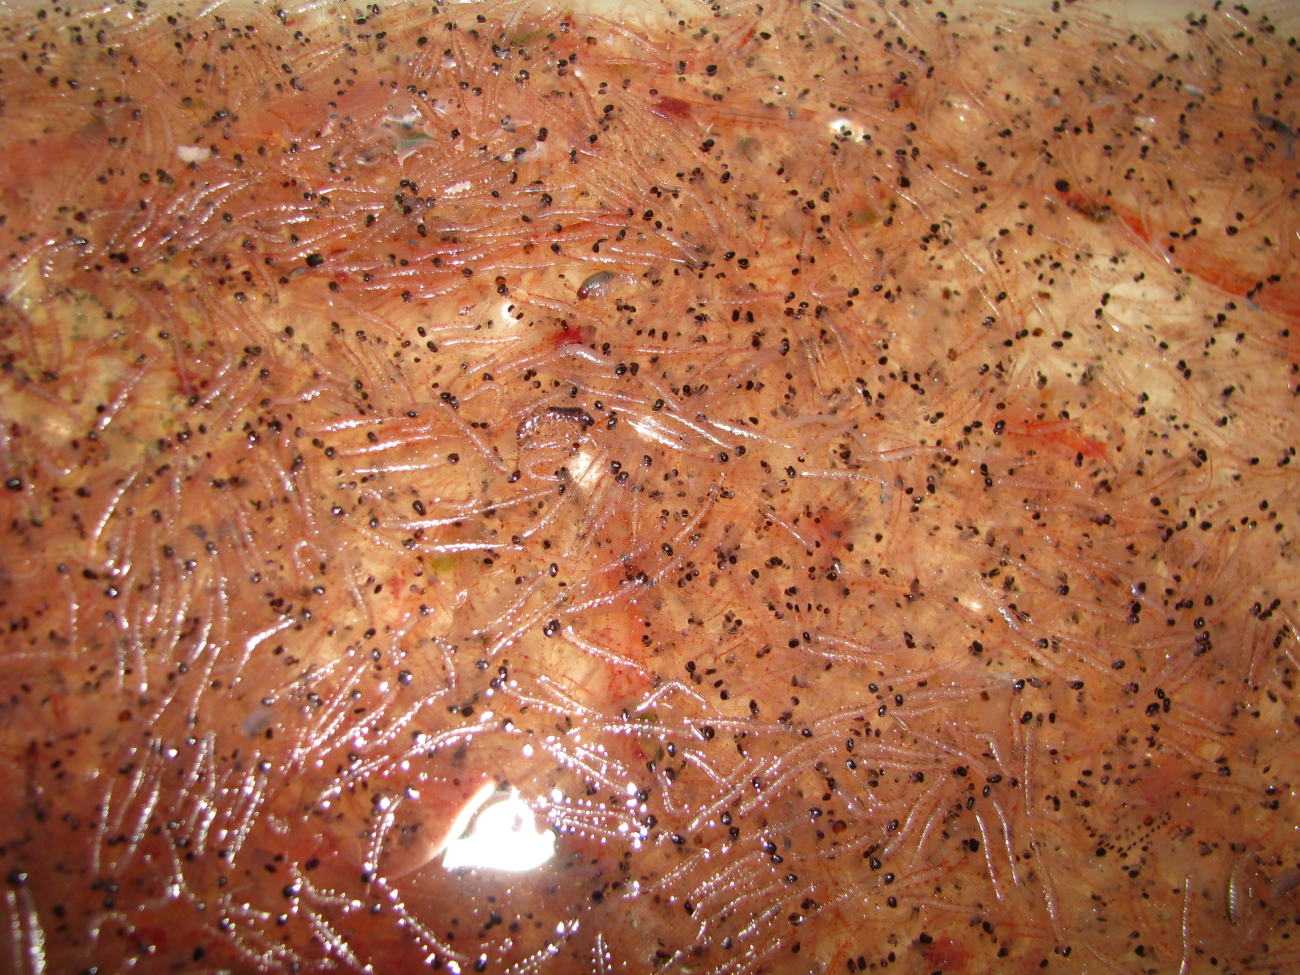 A catch of Antarctic krill, Euphausia superba